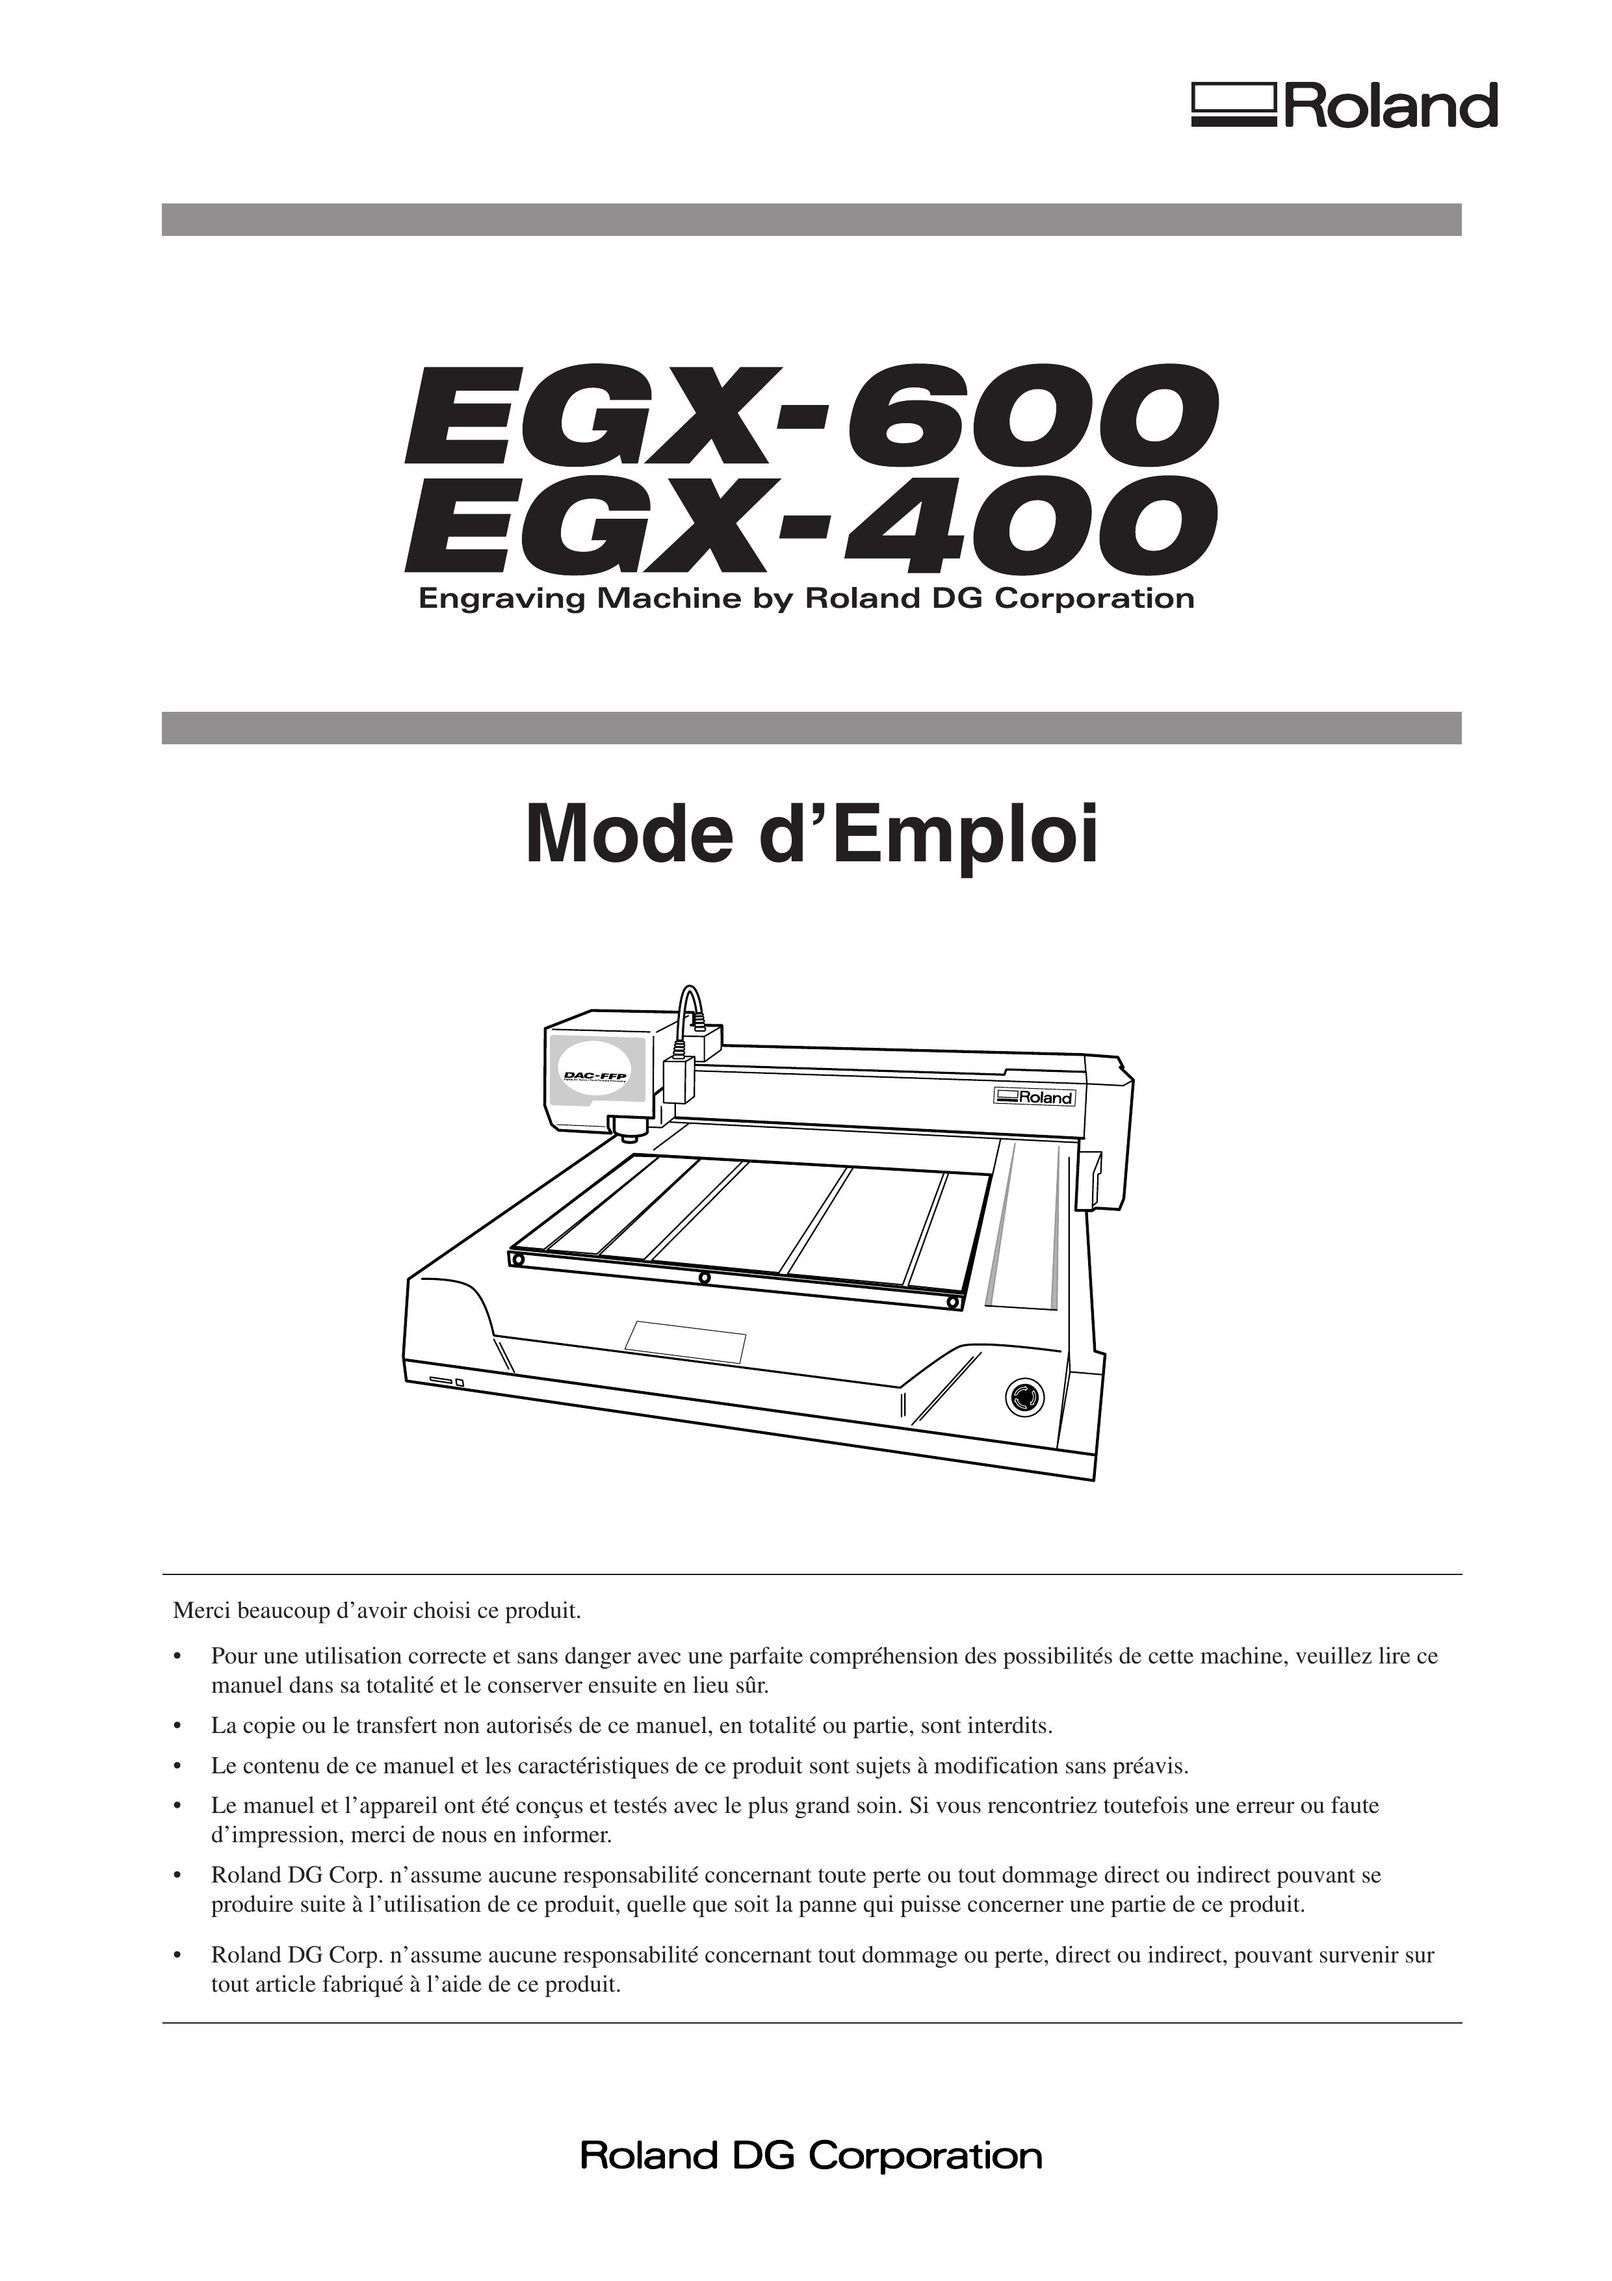 Roland EGX-400 Engraver User Manual